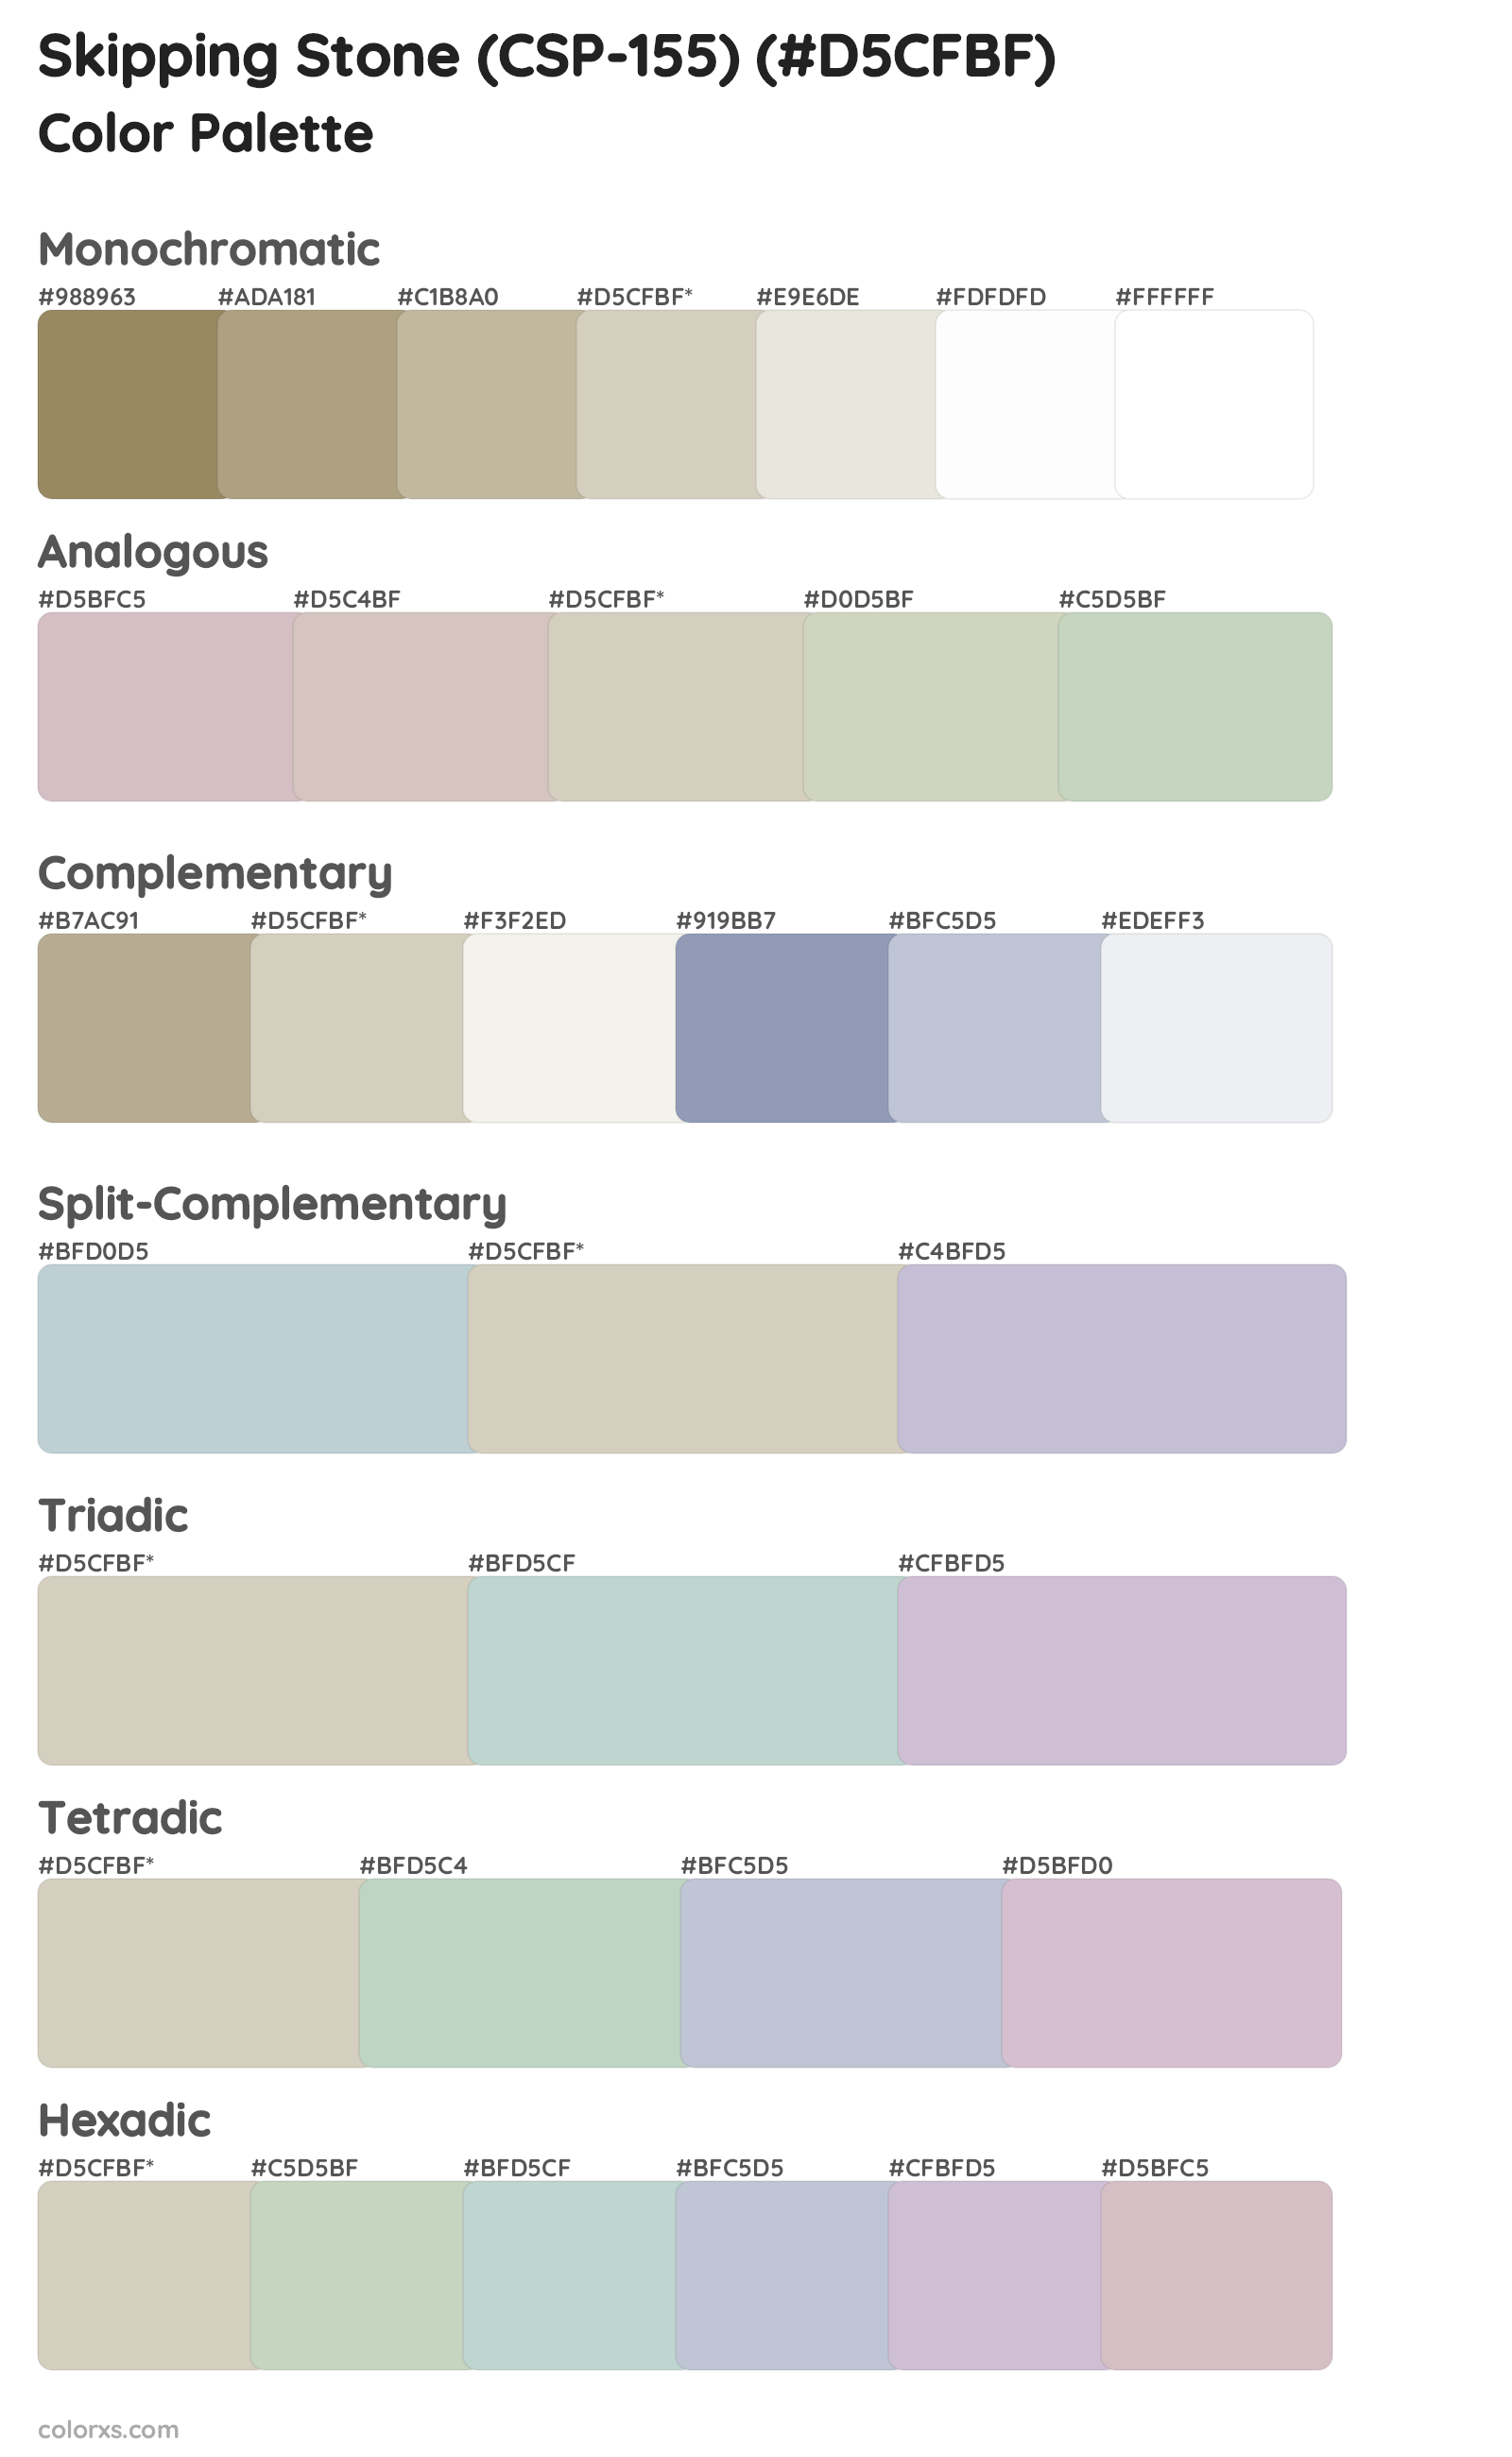 Skipping Stone (CSP-155) Color Scheme Palettes